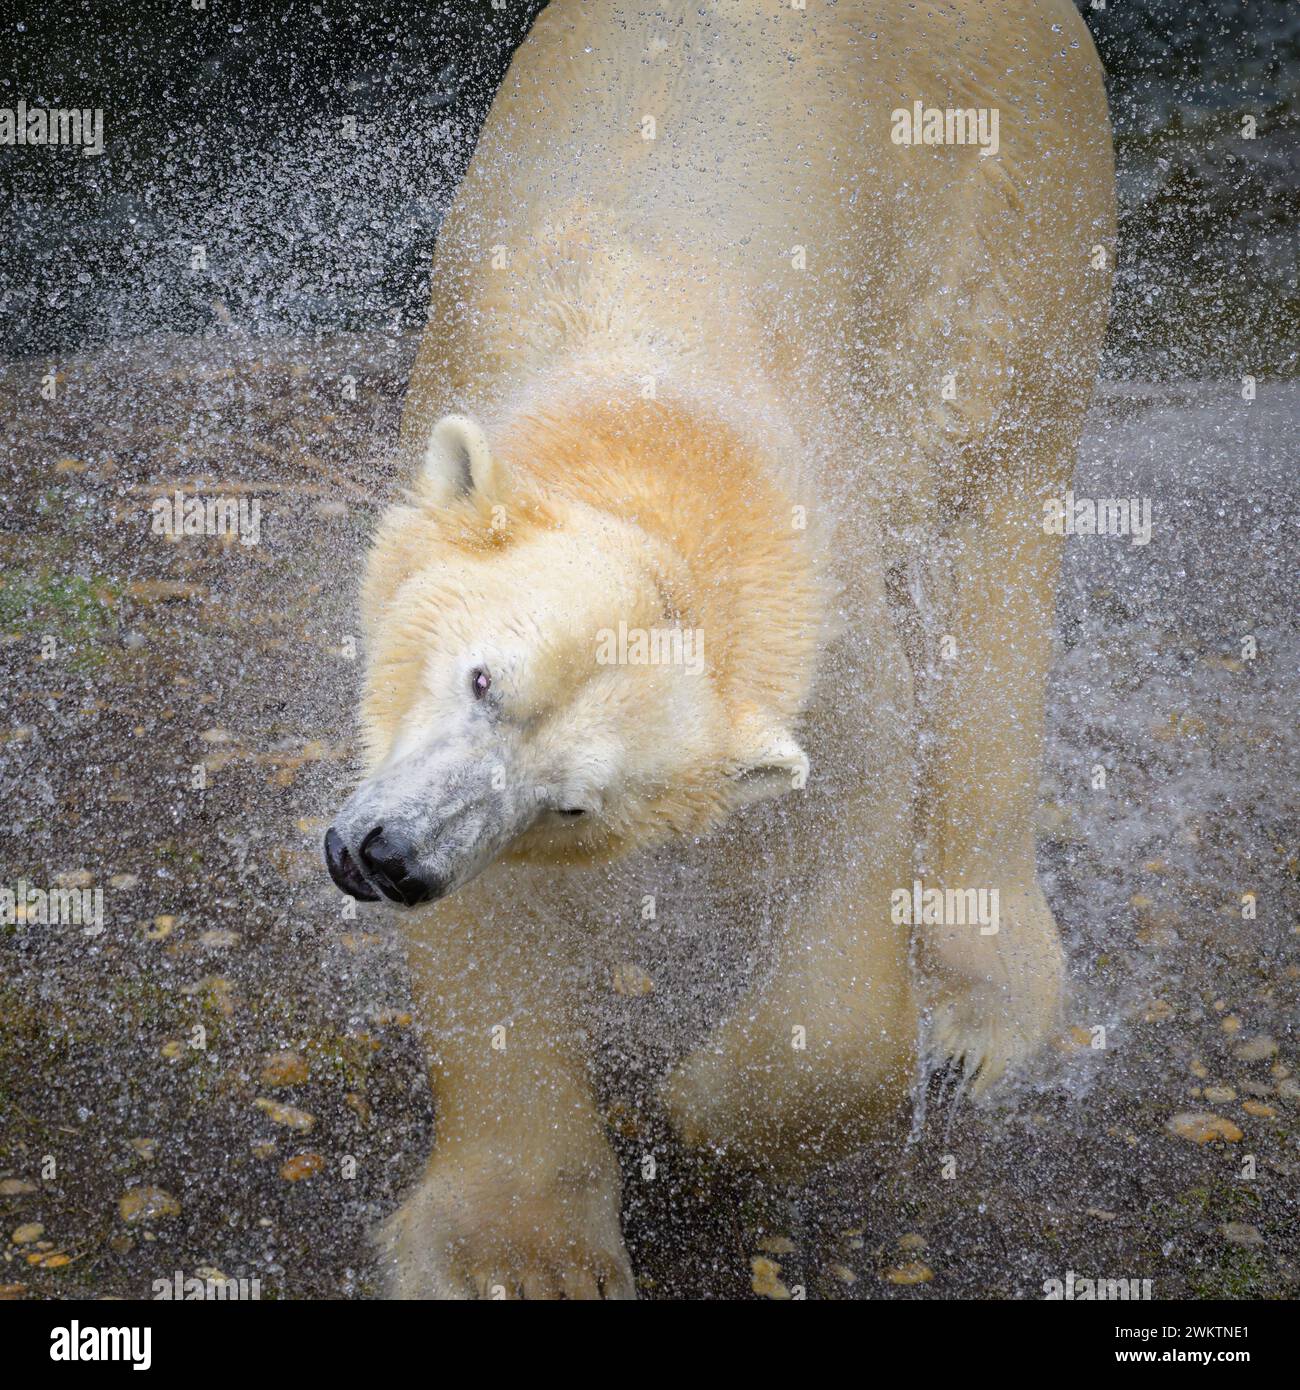 Portrait of a polar bear Ursus maritimus in the water in a zoo, splashing water Austria Stock Photo